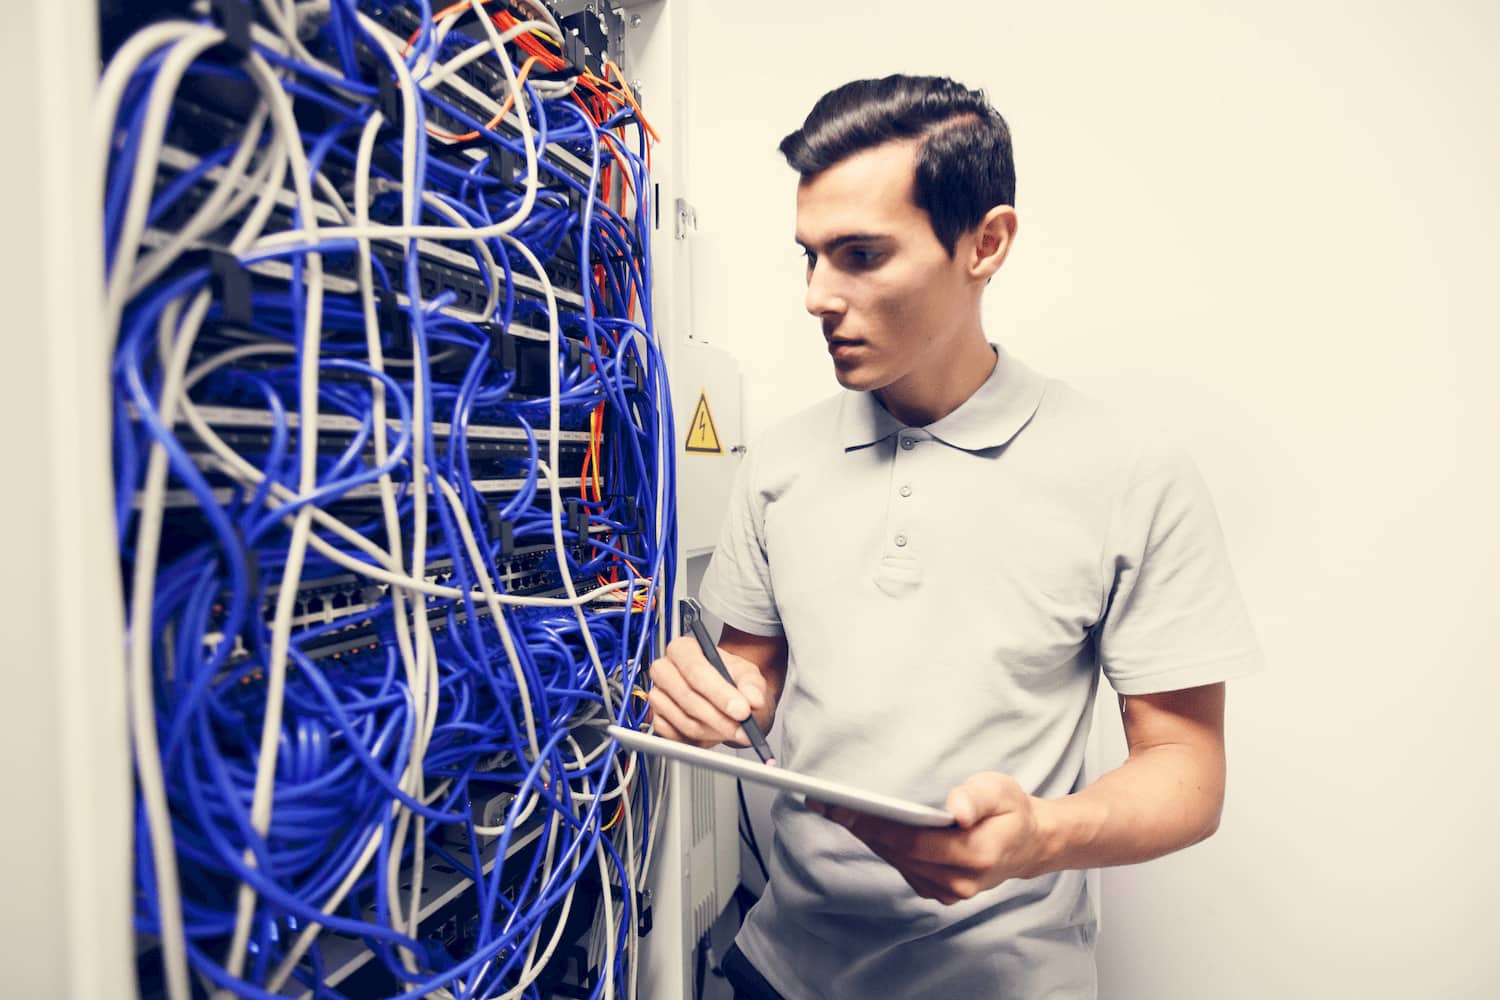 IT-engineer-working-on-a-server-rack